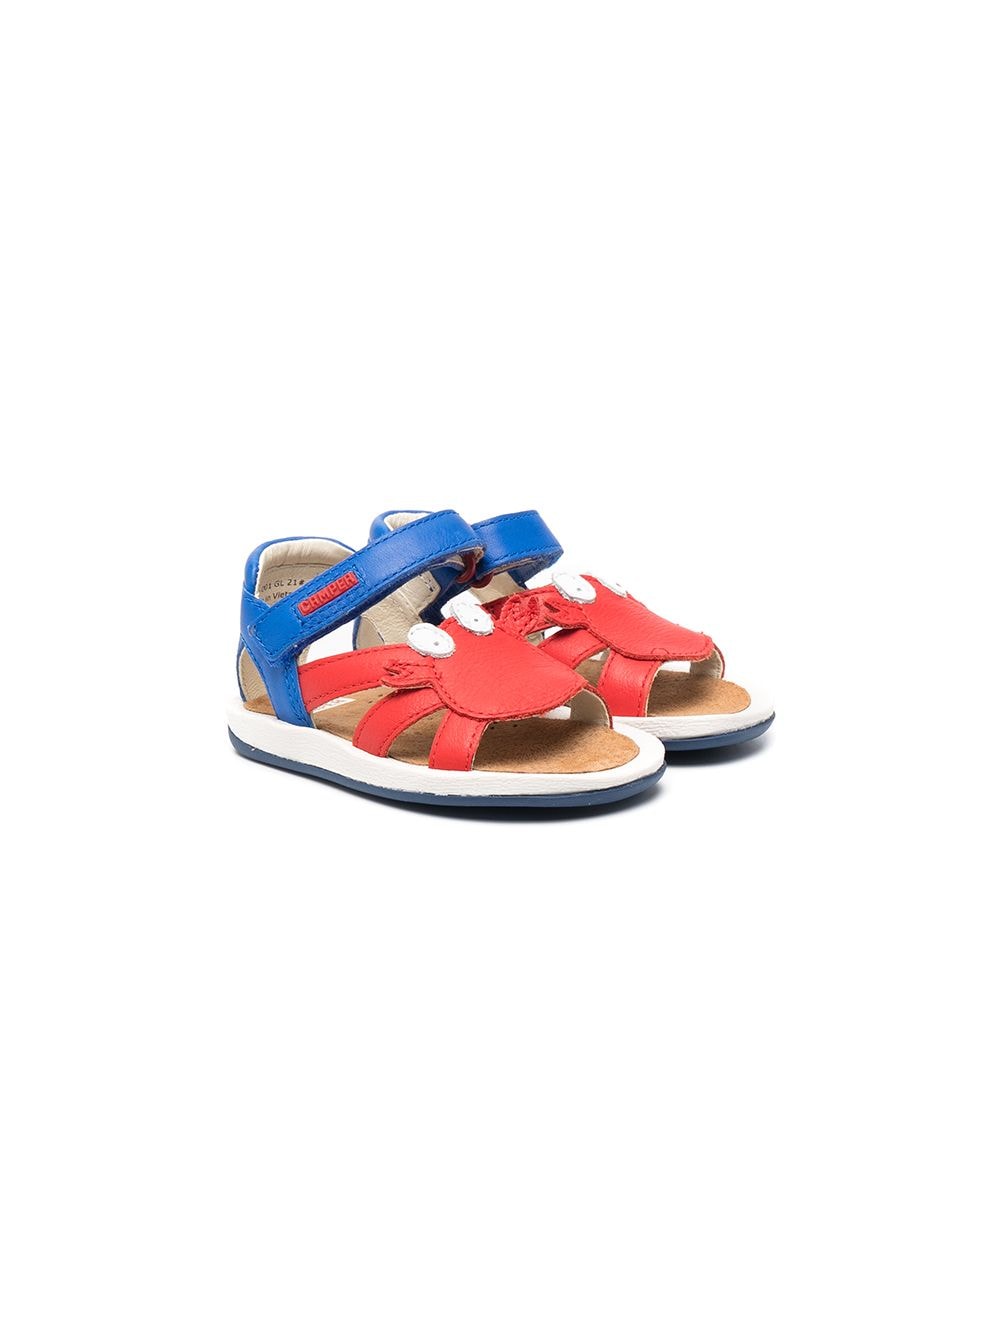 Camper Kids Crab pre-walker sandals - Blue von Camper Kids